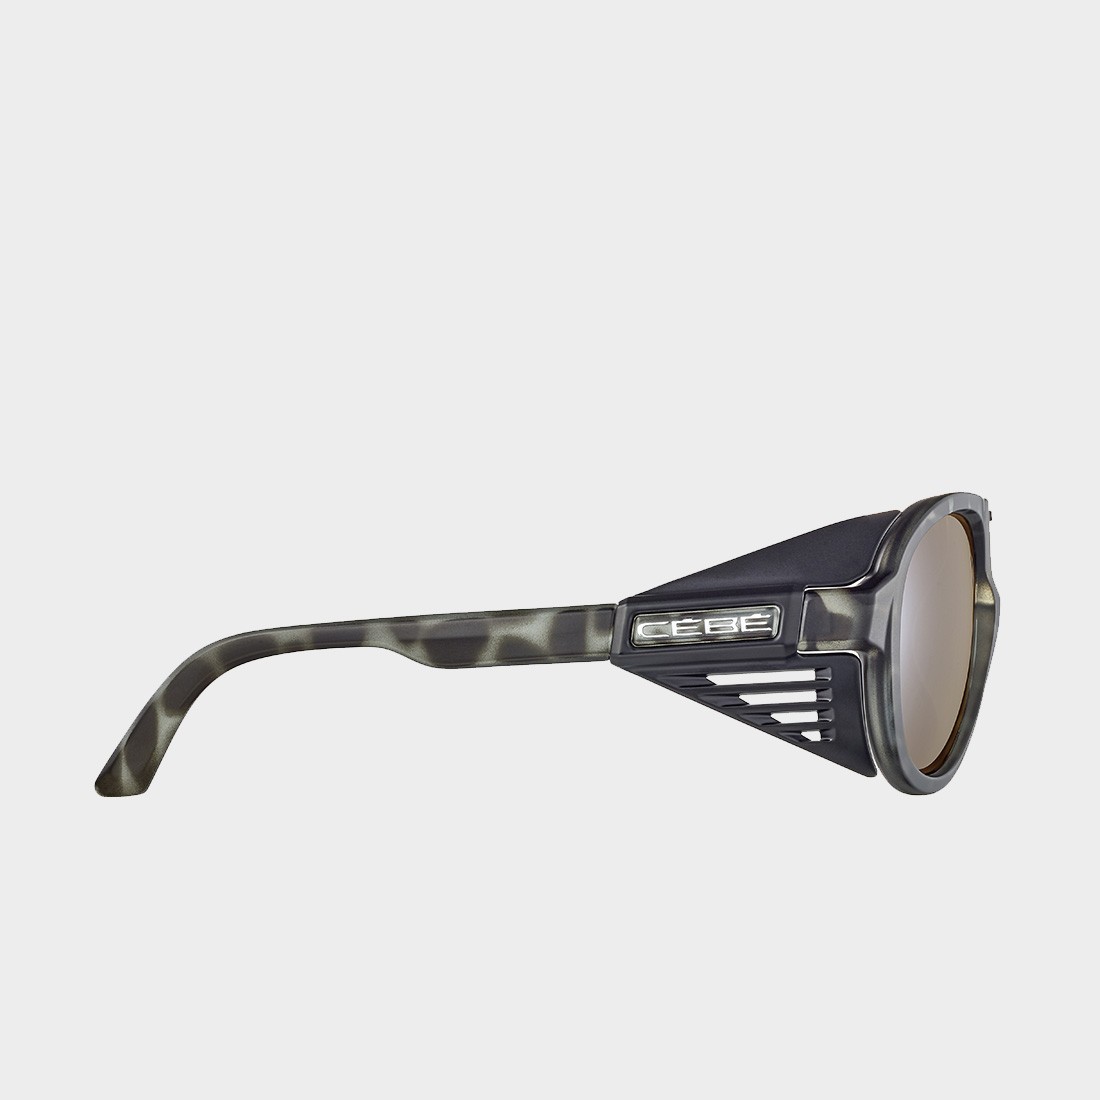 cebe-kult-sport-glasses-style-medium-brown